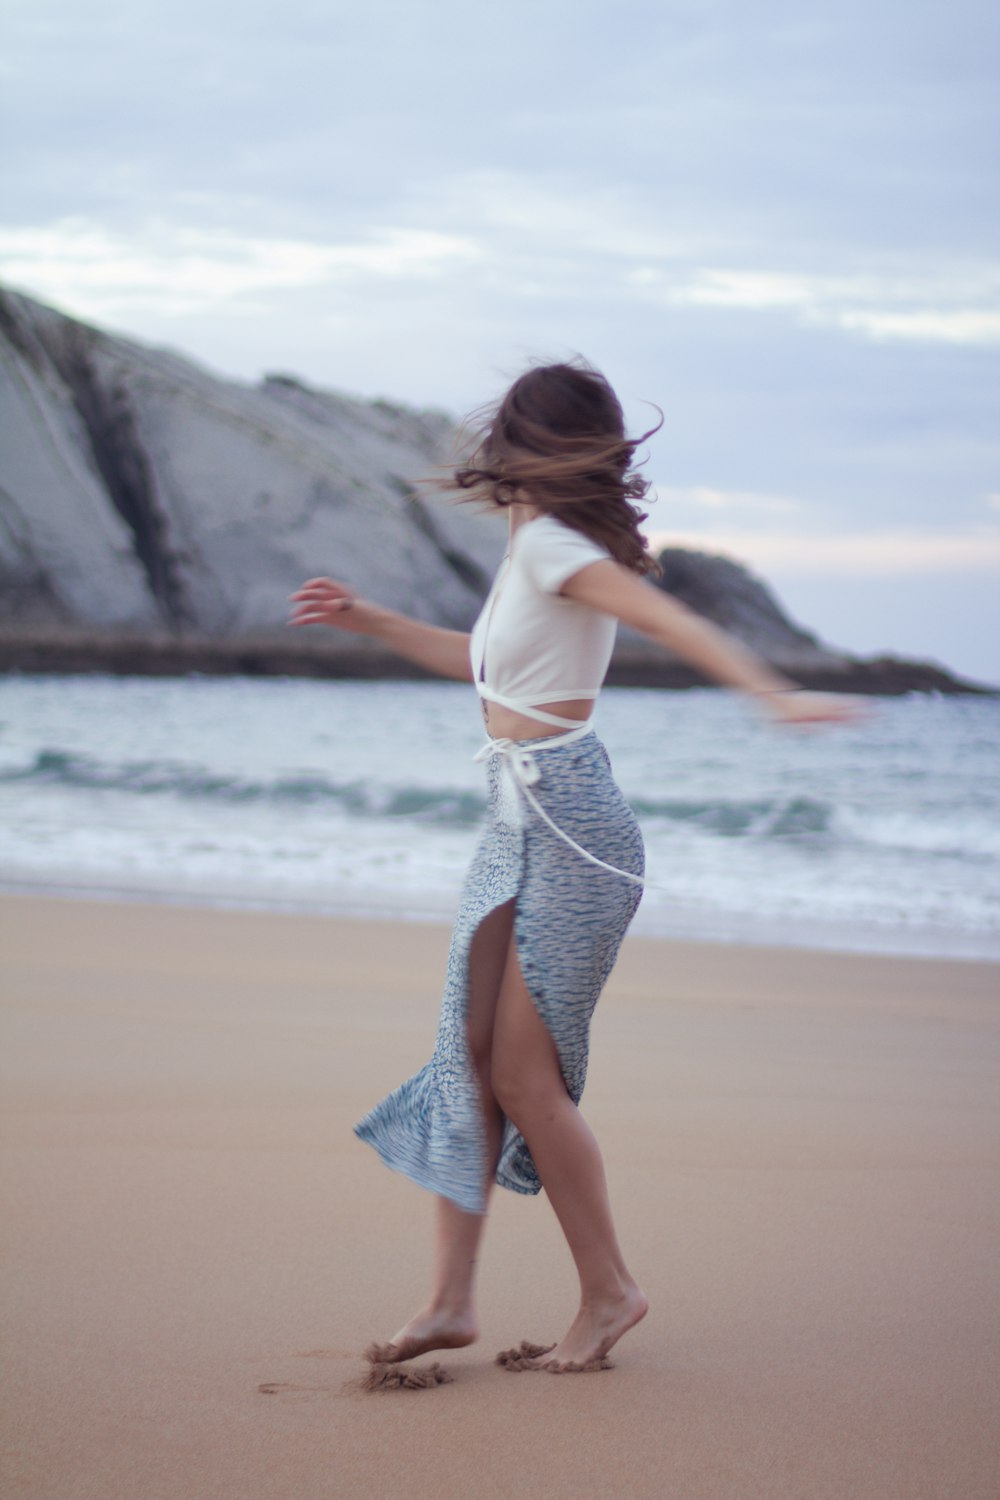 a woman walking on a beach next to the ocean